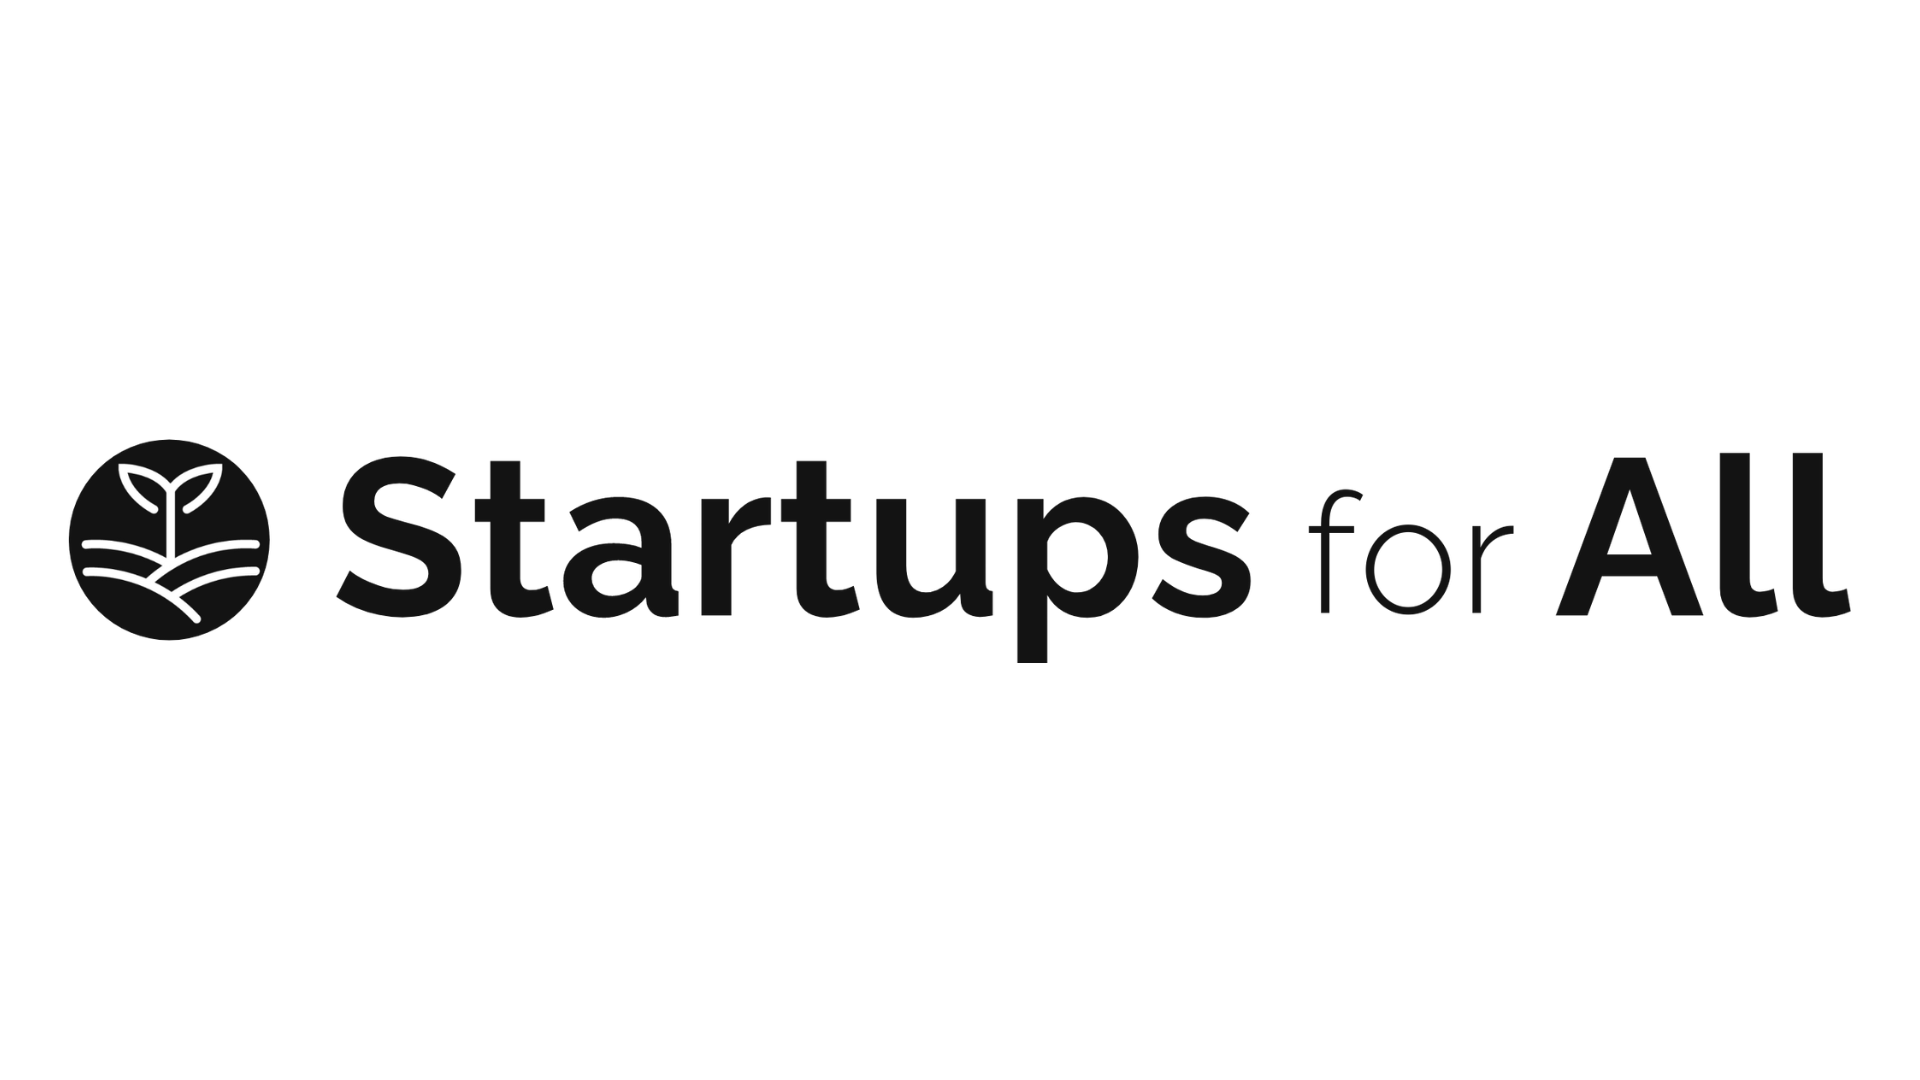 Startups for All